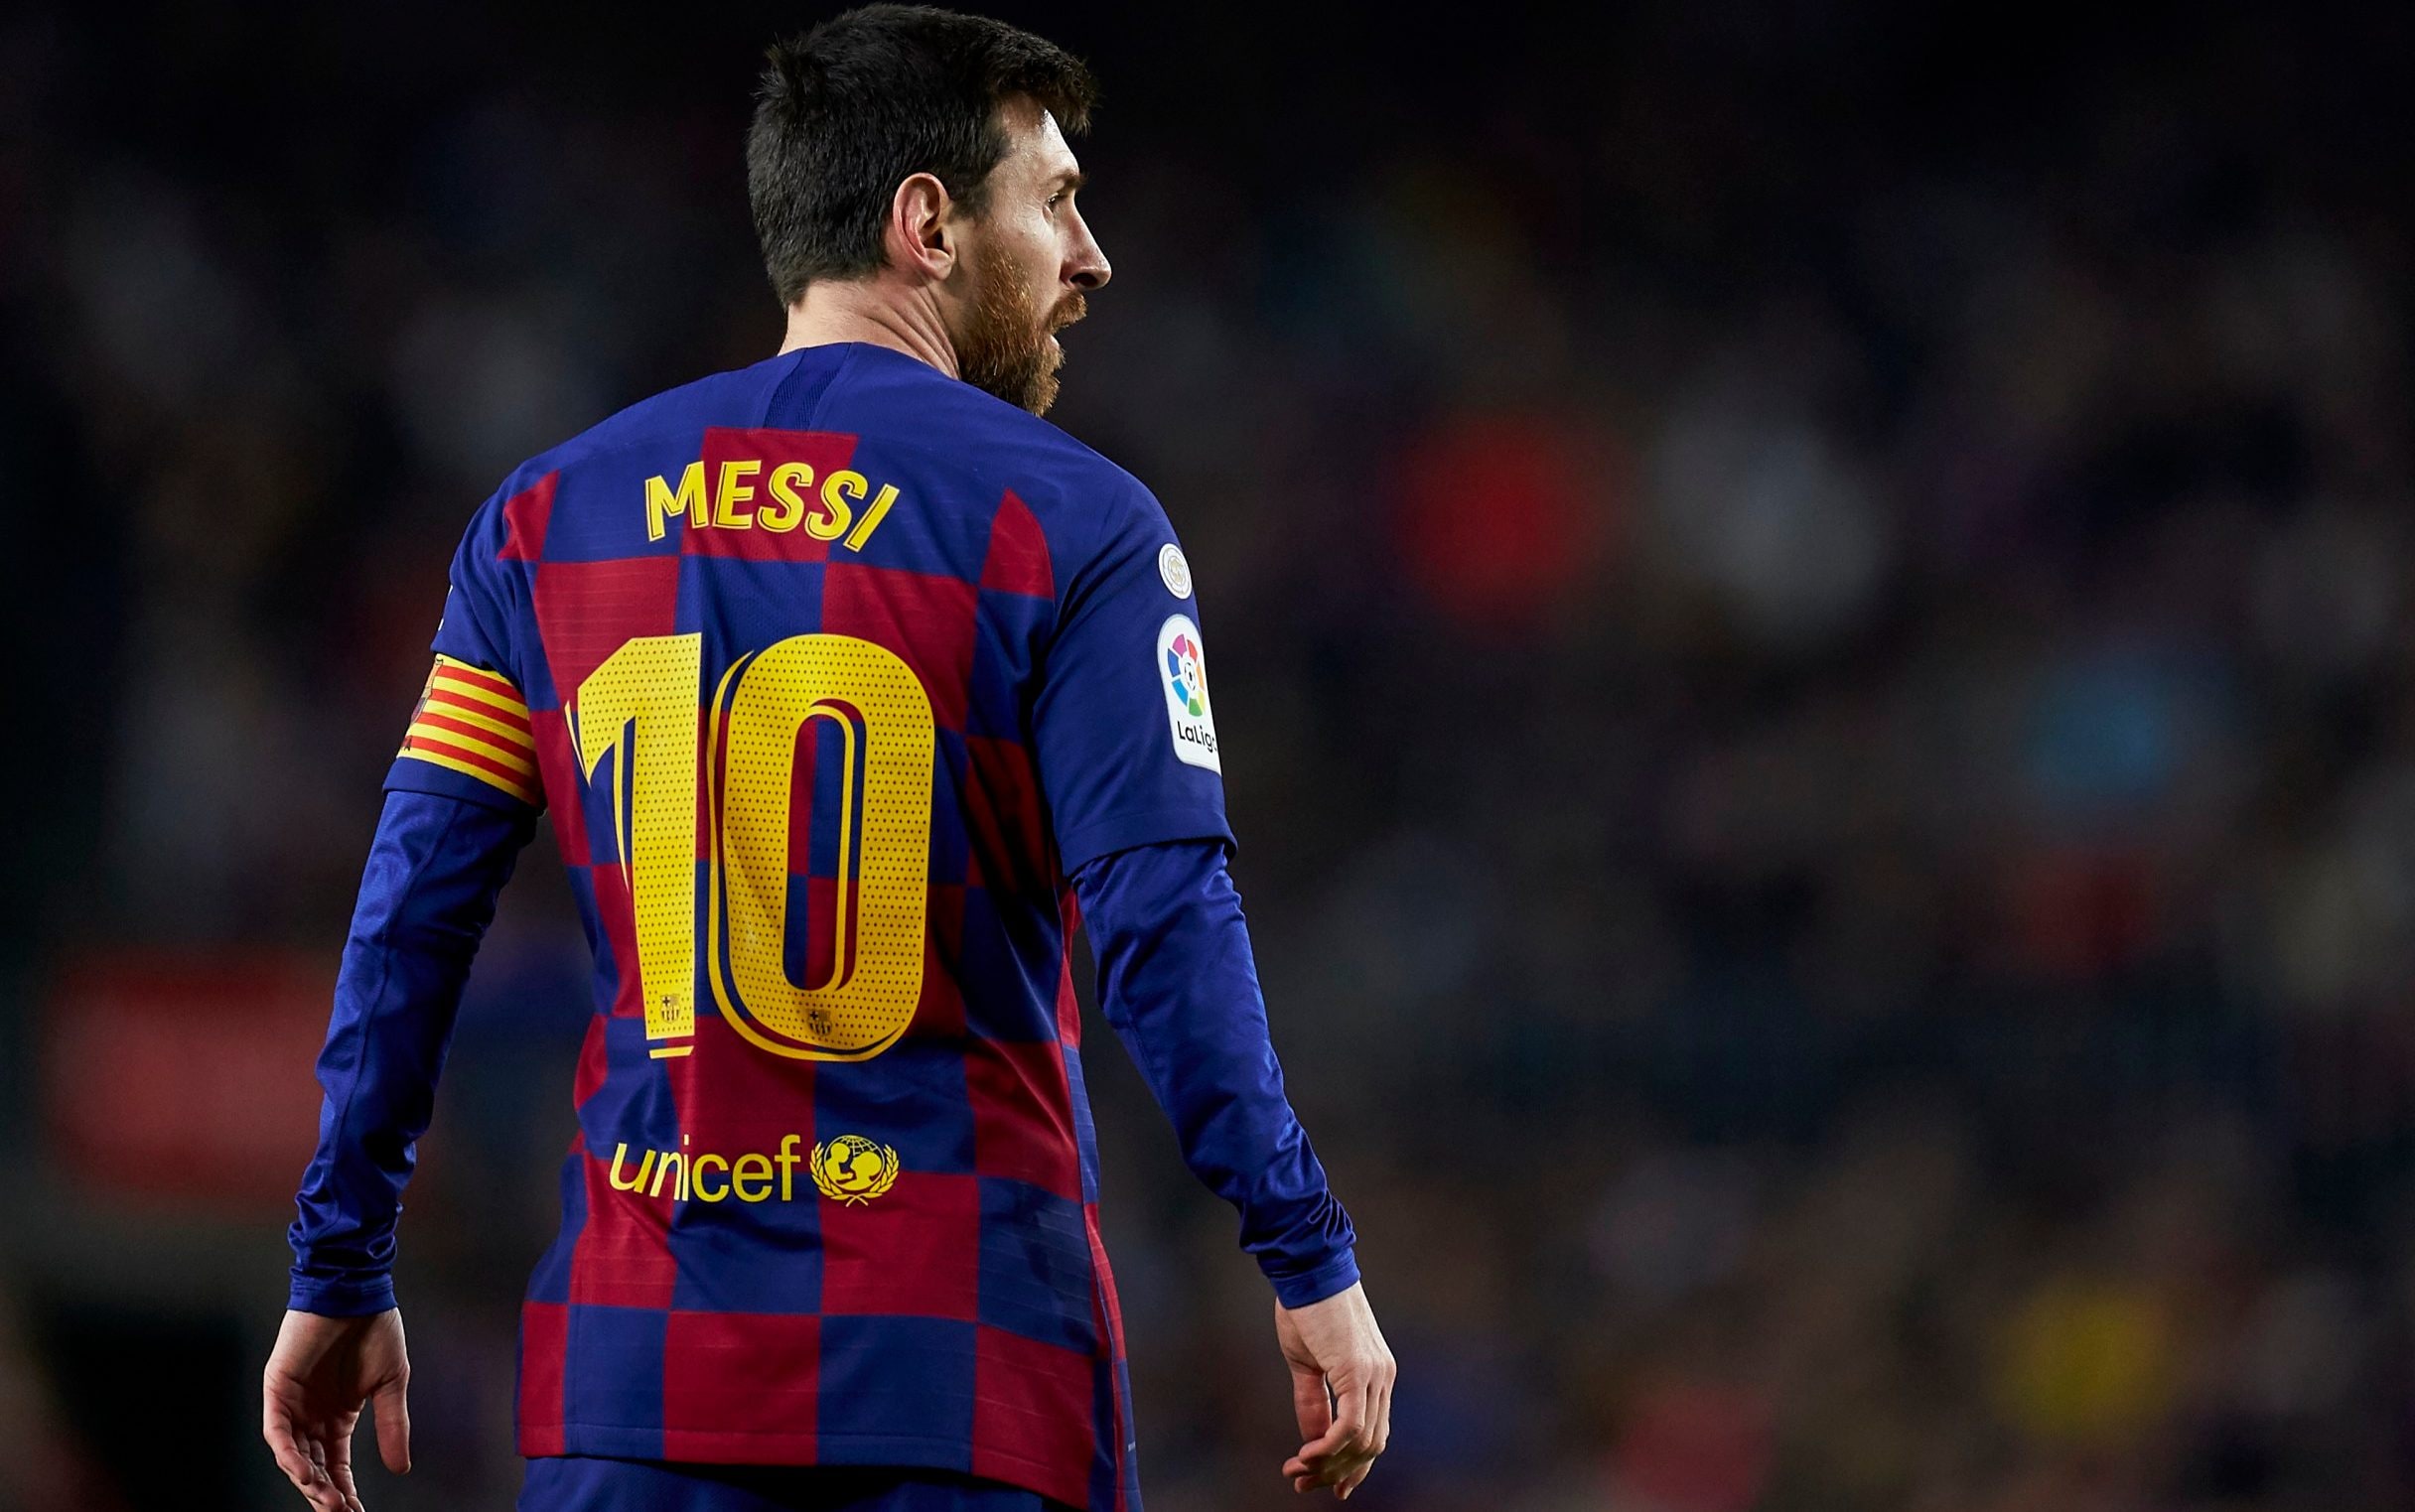 لیونل مسی-Lionel Messi-بارسلونا-اسپانیا-لالیگا-جوزپ ماریا بارتومئو-اریک آبیدال-خوان لاپورتا-ویکتور فونت-ژاوی